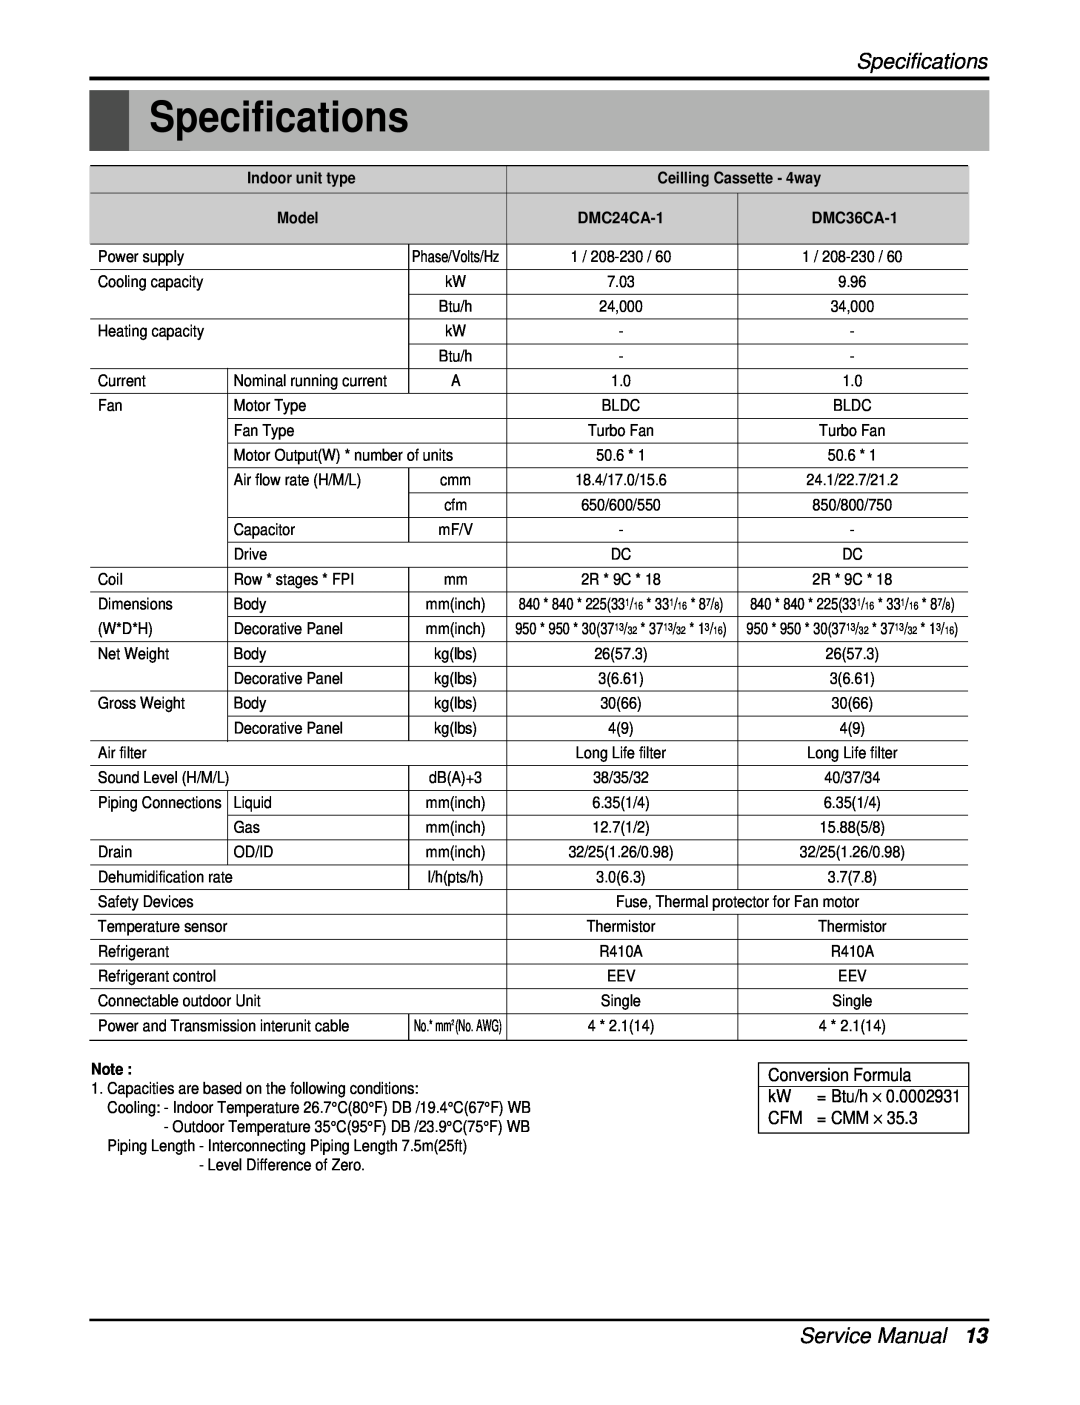 Heat Controller DMC36CA-1, DMC24CA-1 manual Specifications 